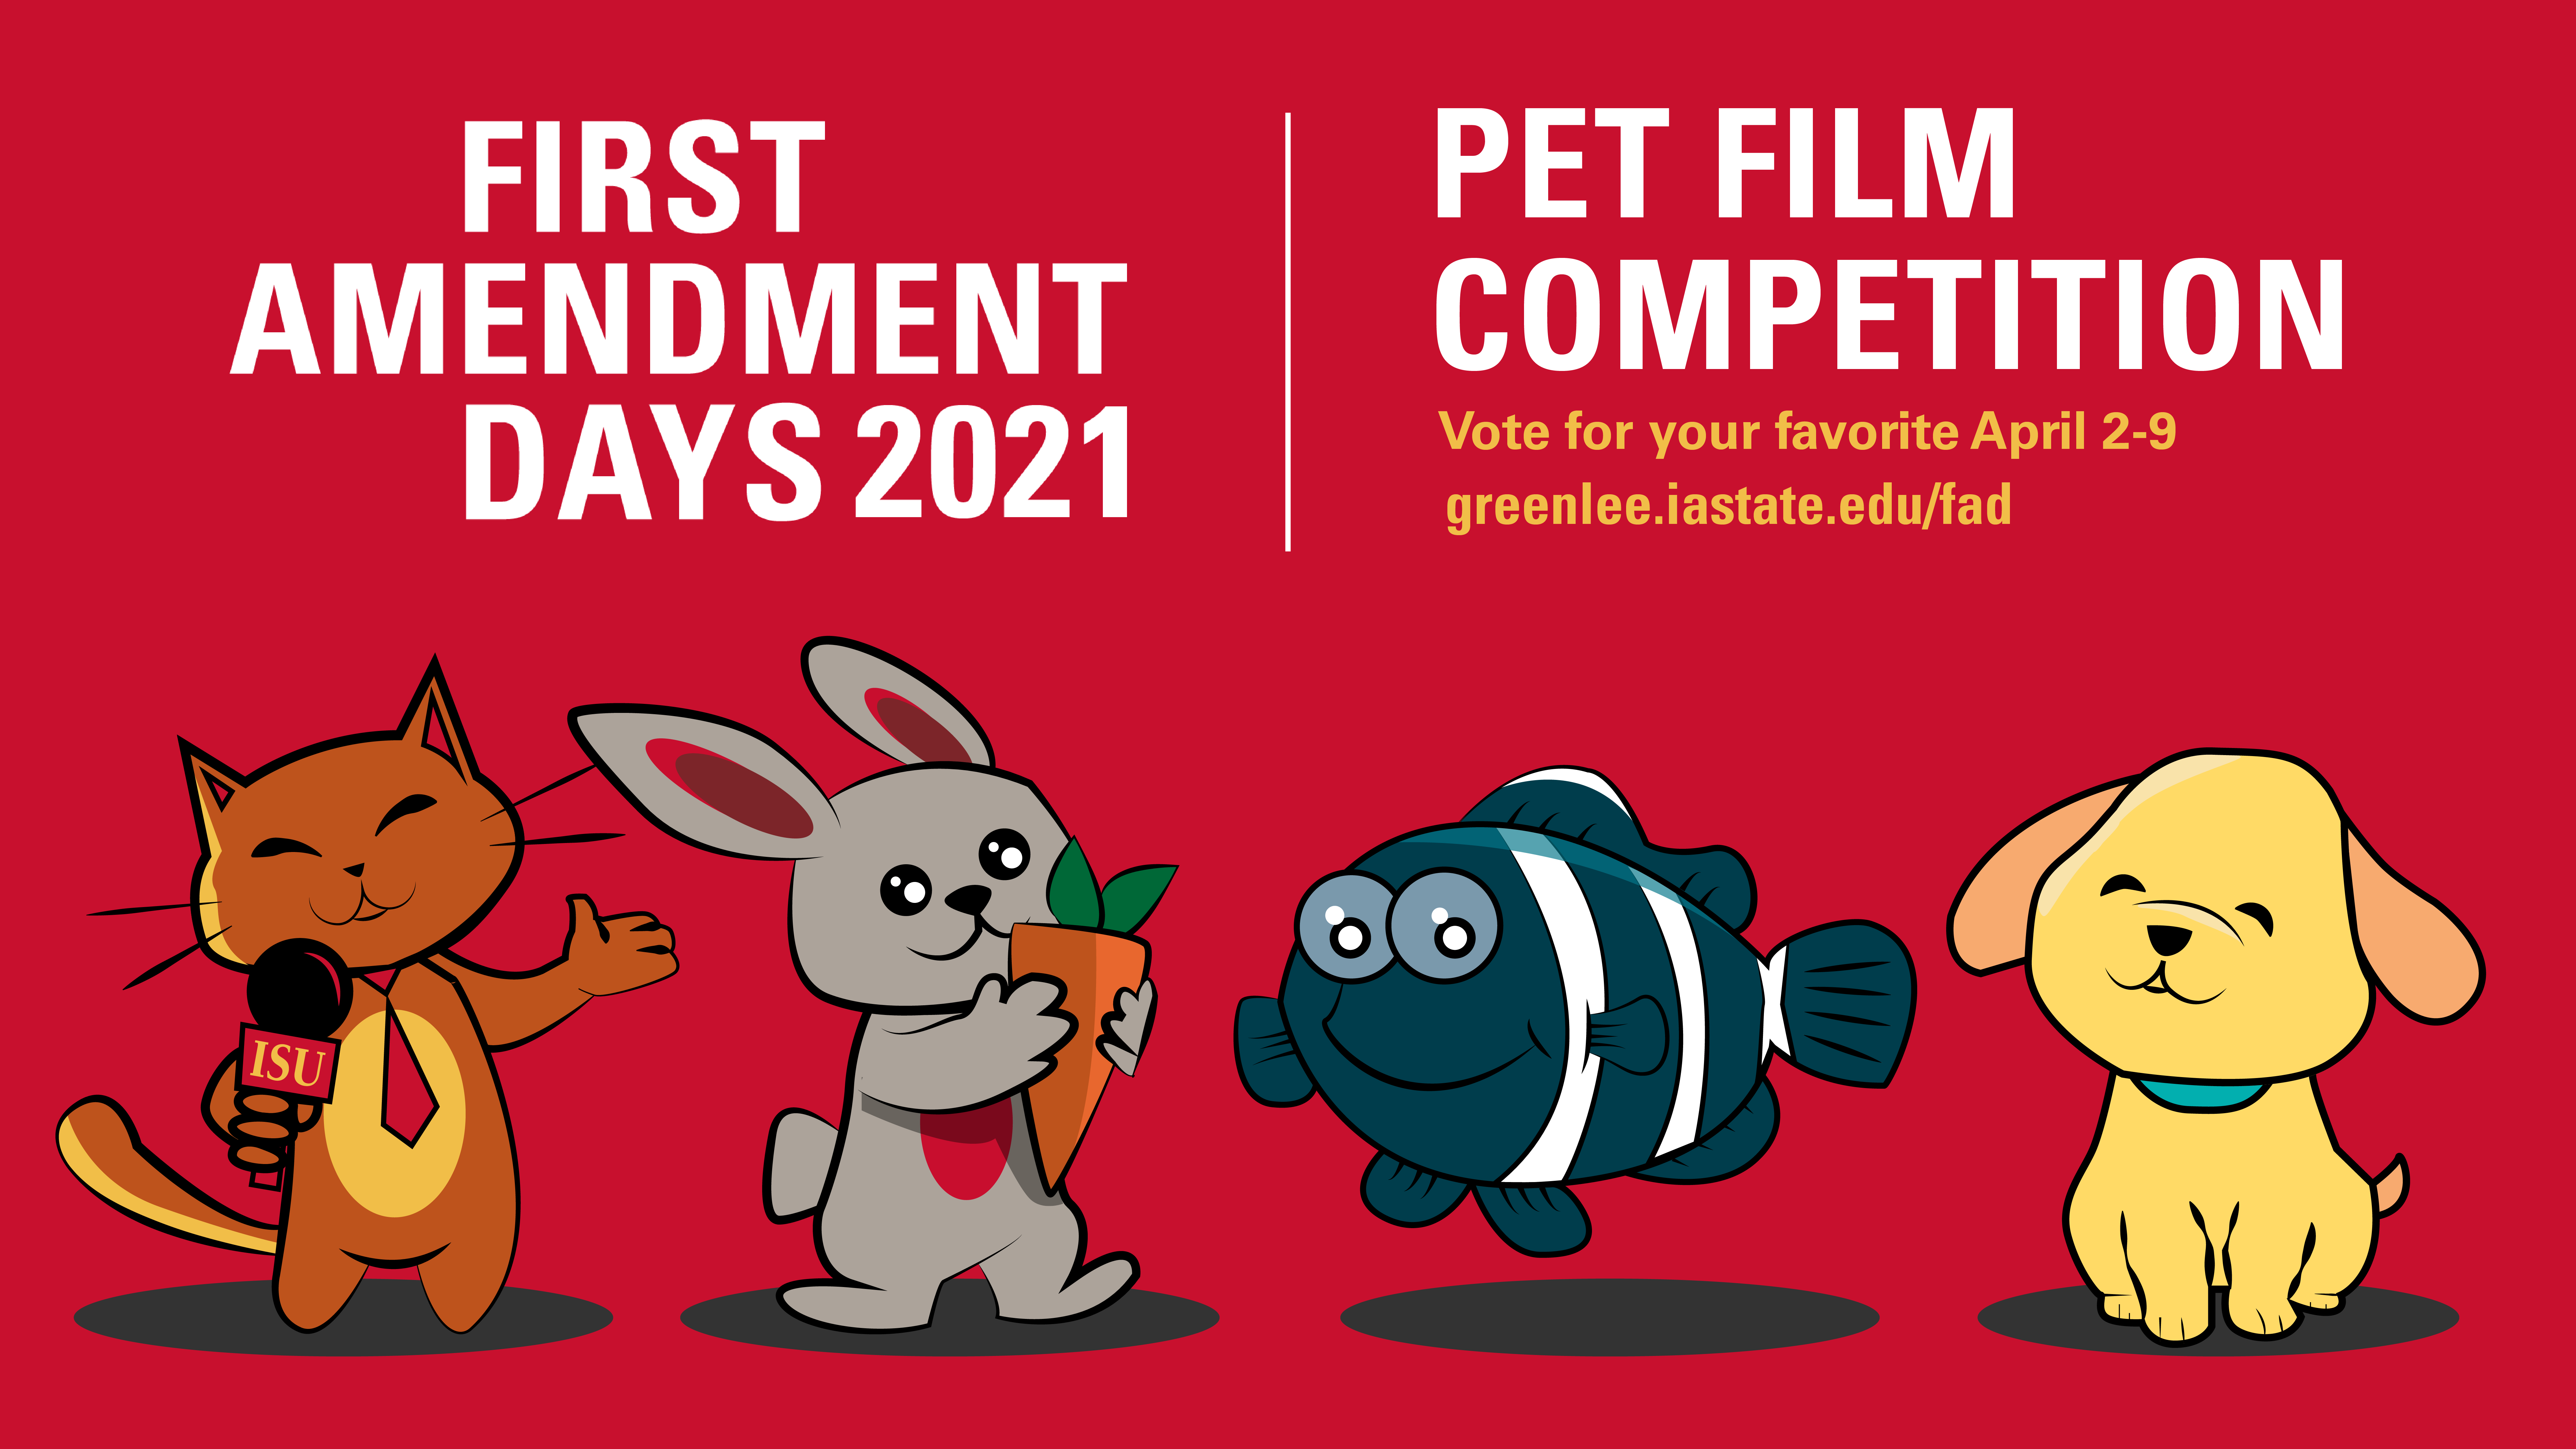 FAD pet film competition voting